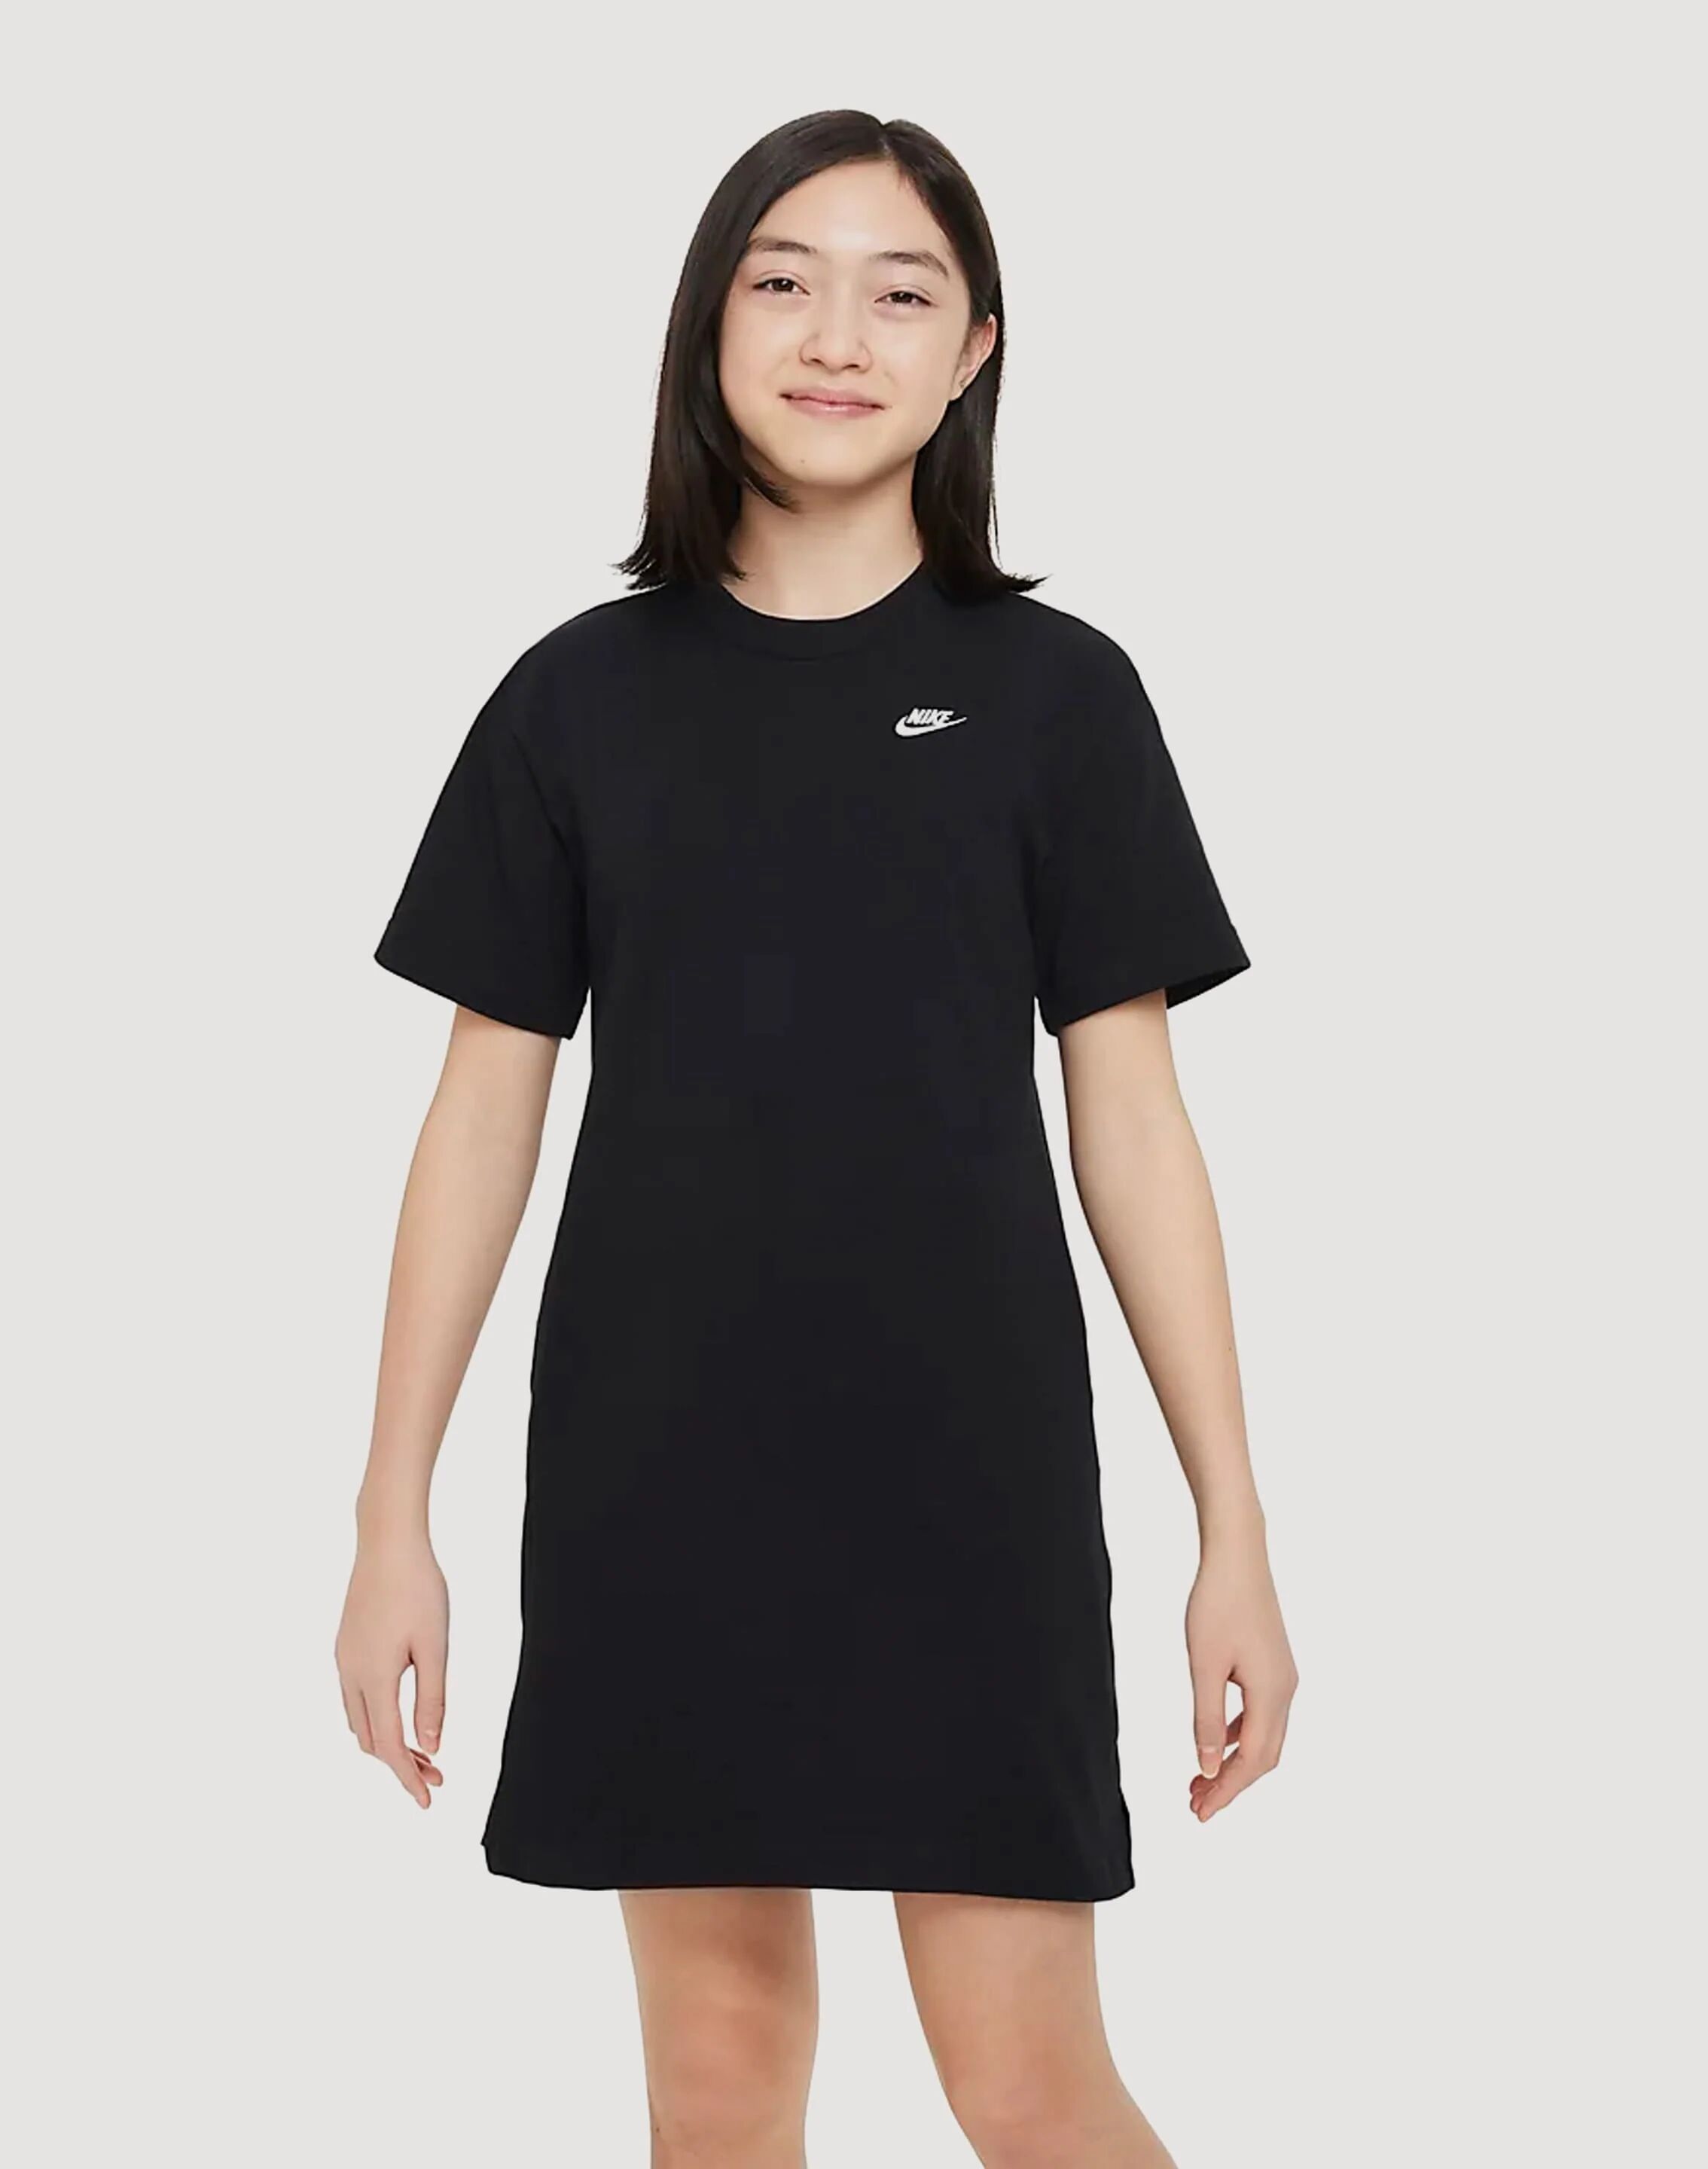 Nike T-Shirt Dress Grade-School  - Black - Size: Medium